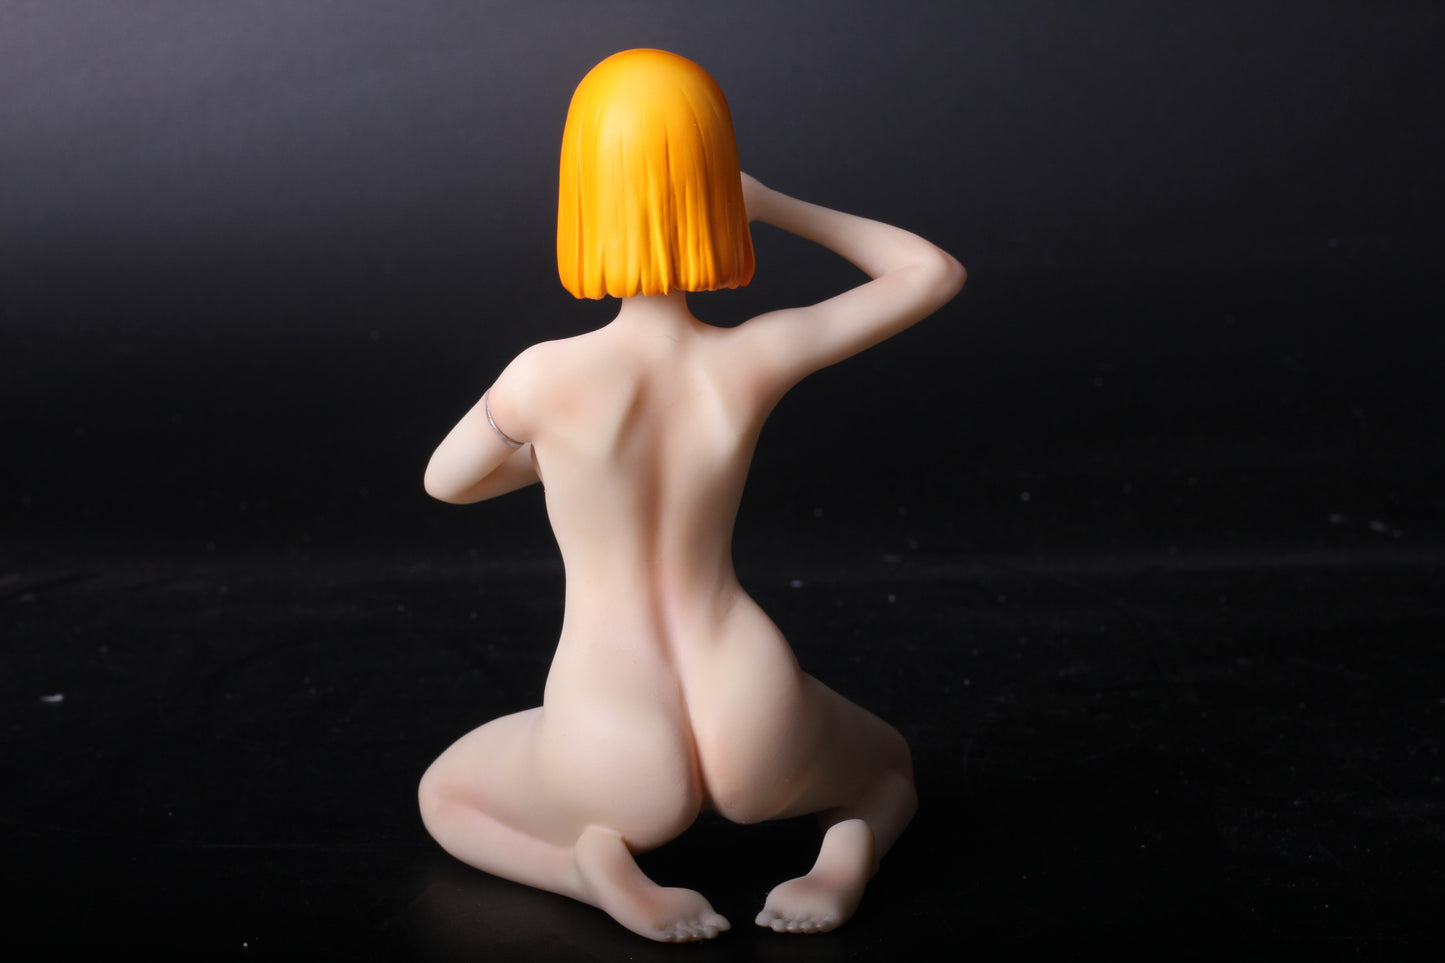 Prison School midorikawa hana 1/6 naked anime figure sexy resin figures